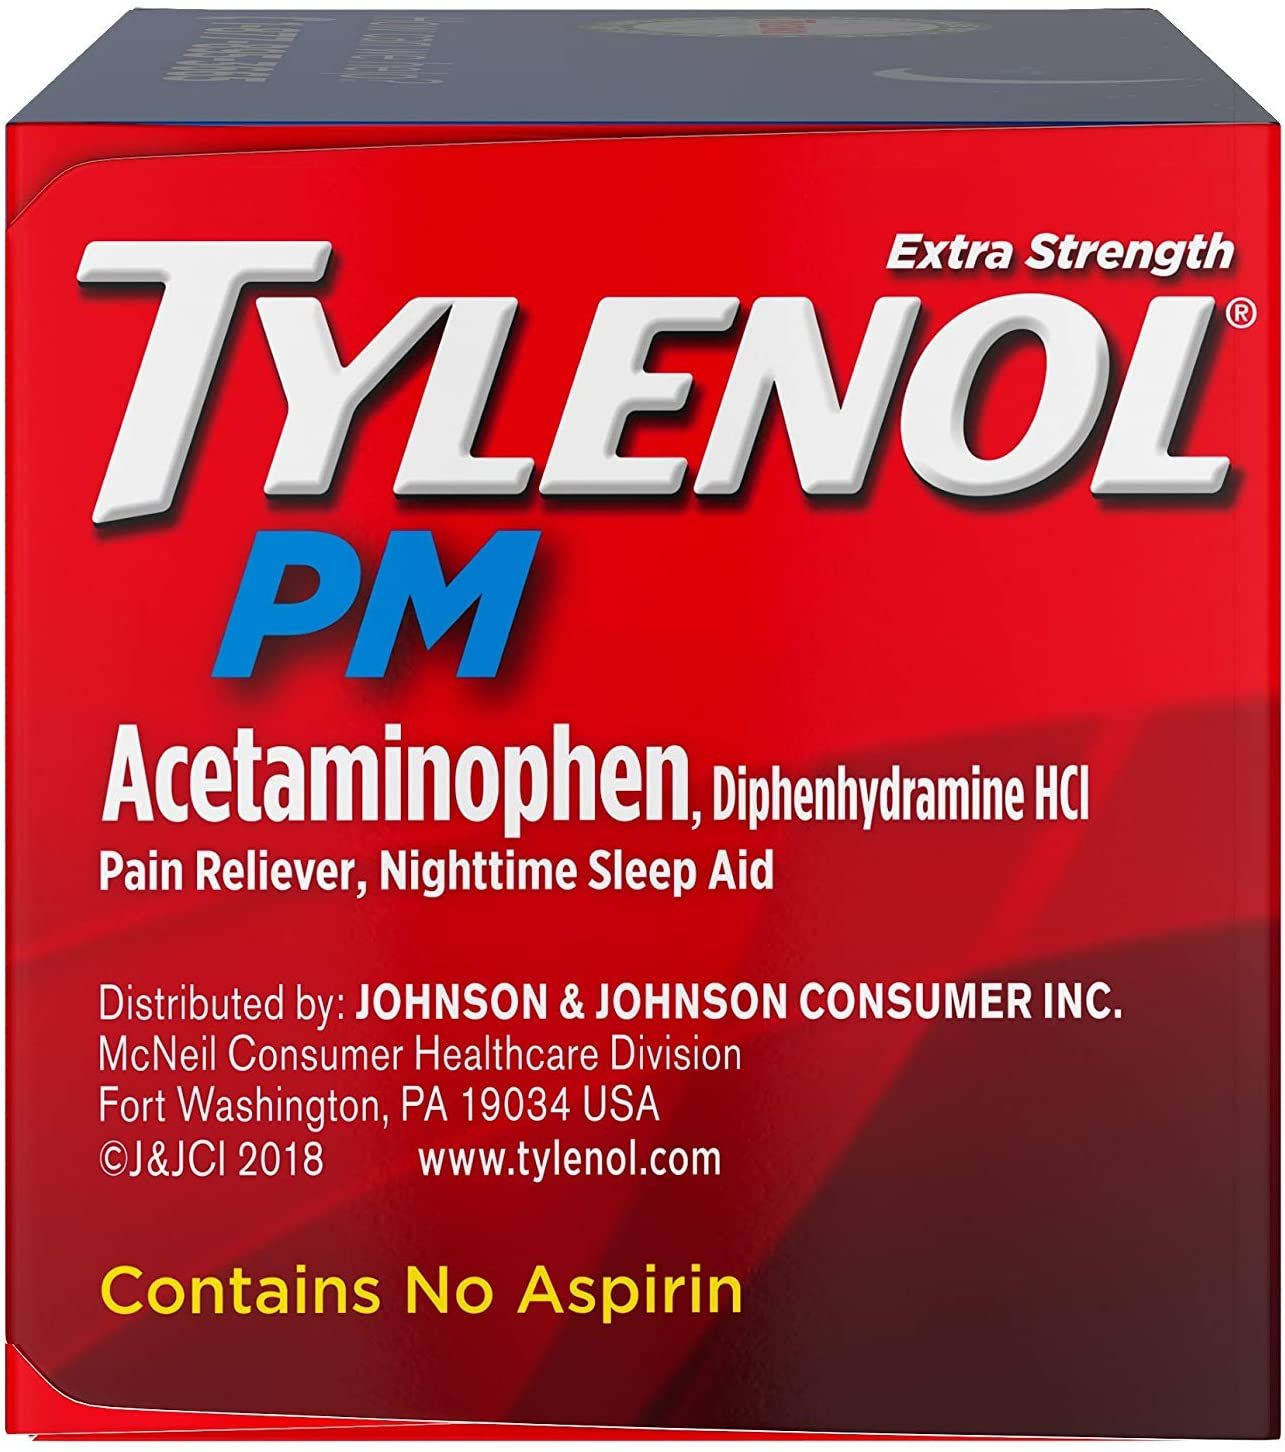 Tylenol PM Extra Strength Pain Reliever & Sleep Aid Caplets - Acetaminophen - 100 ct